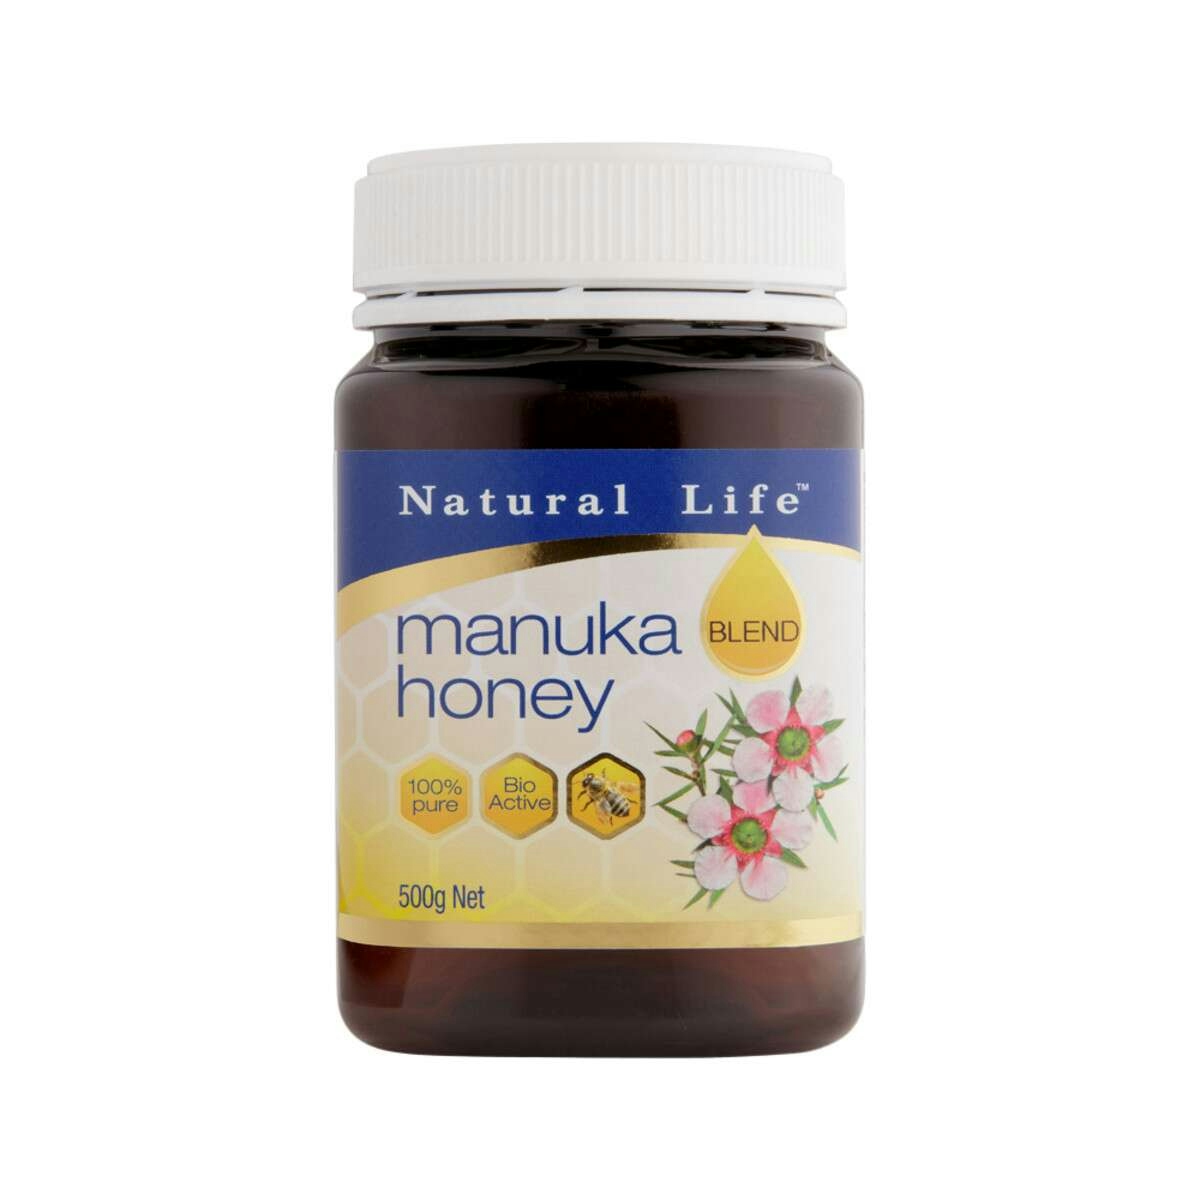 image of Natural Life Manuka Honey Blend 500g on white background